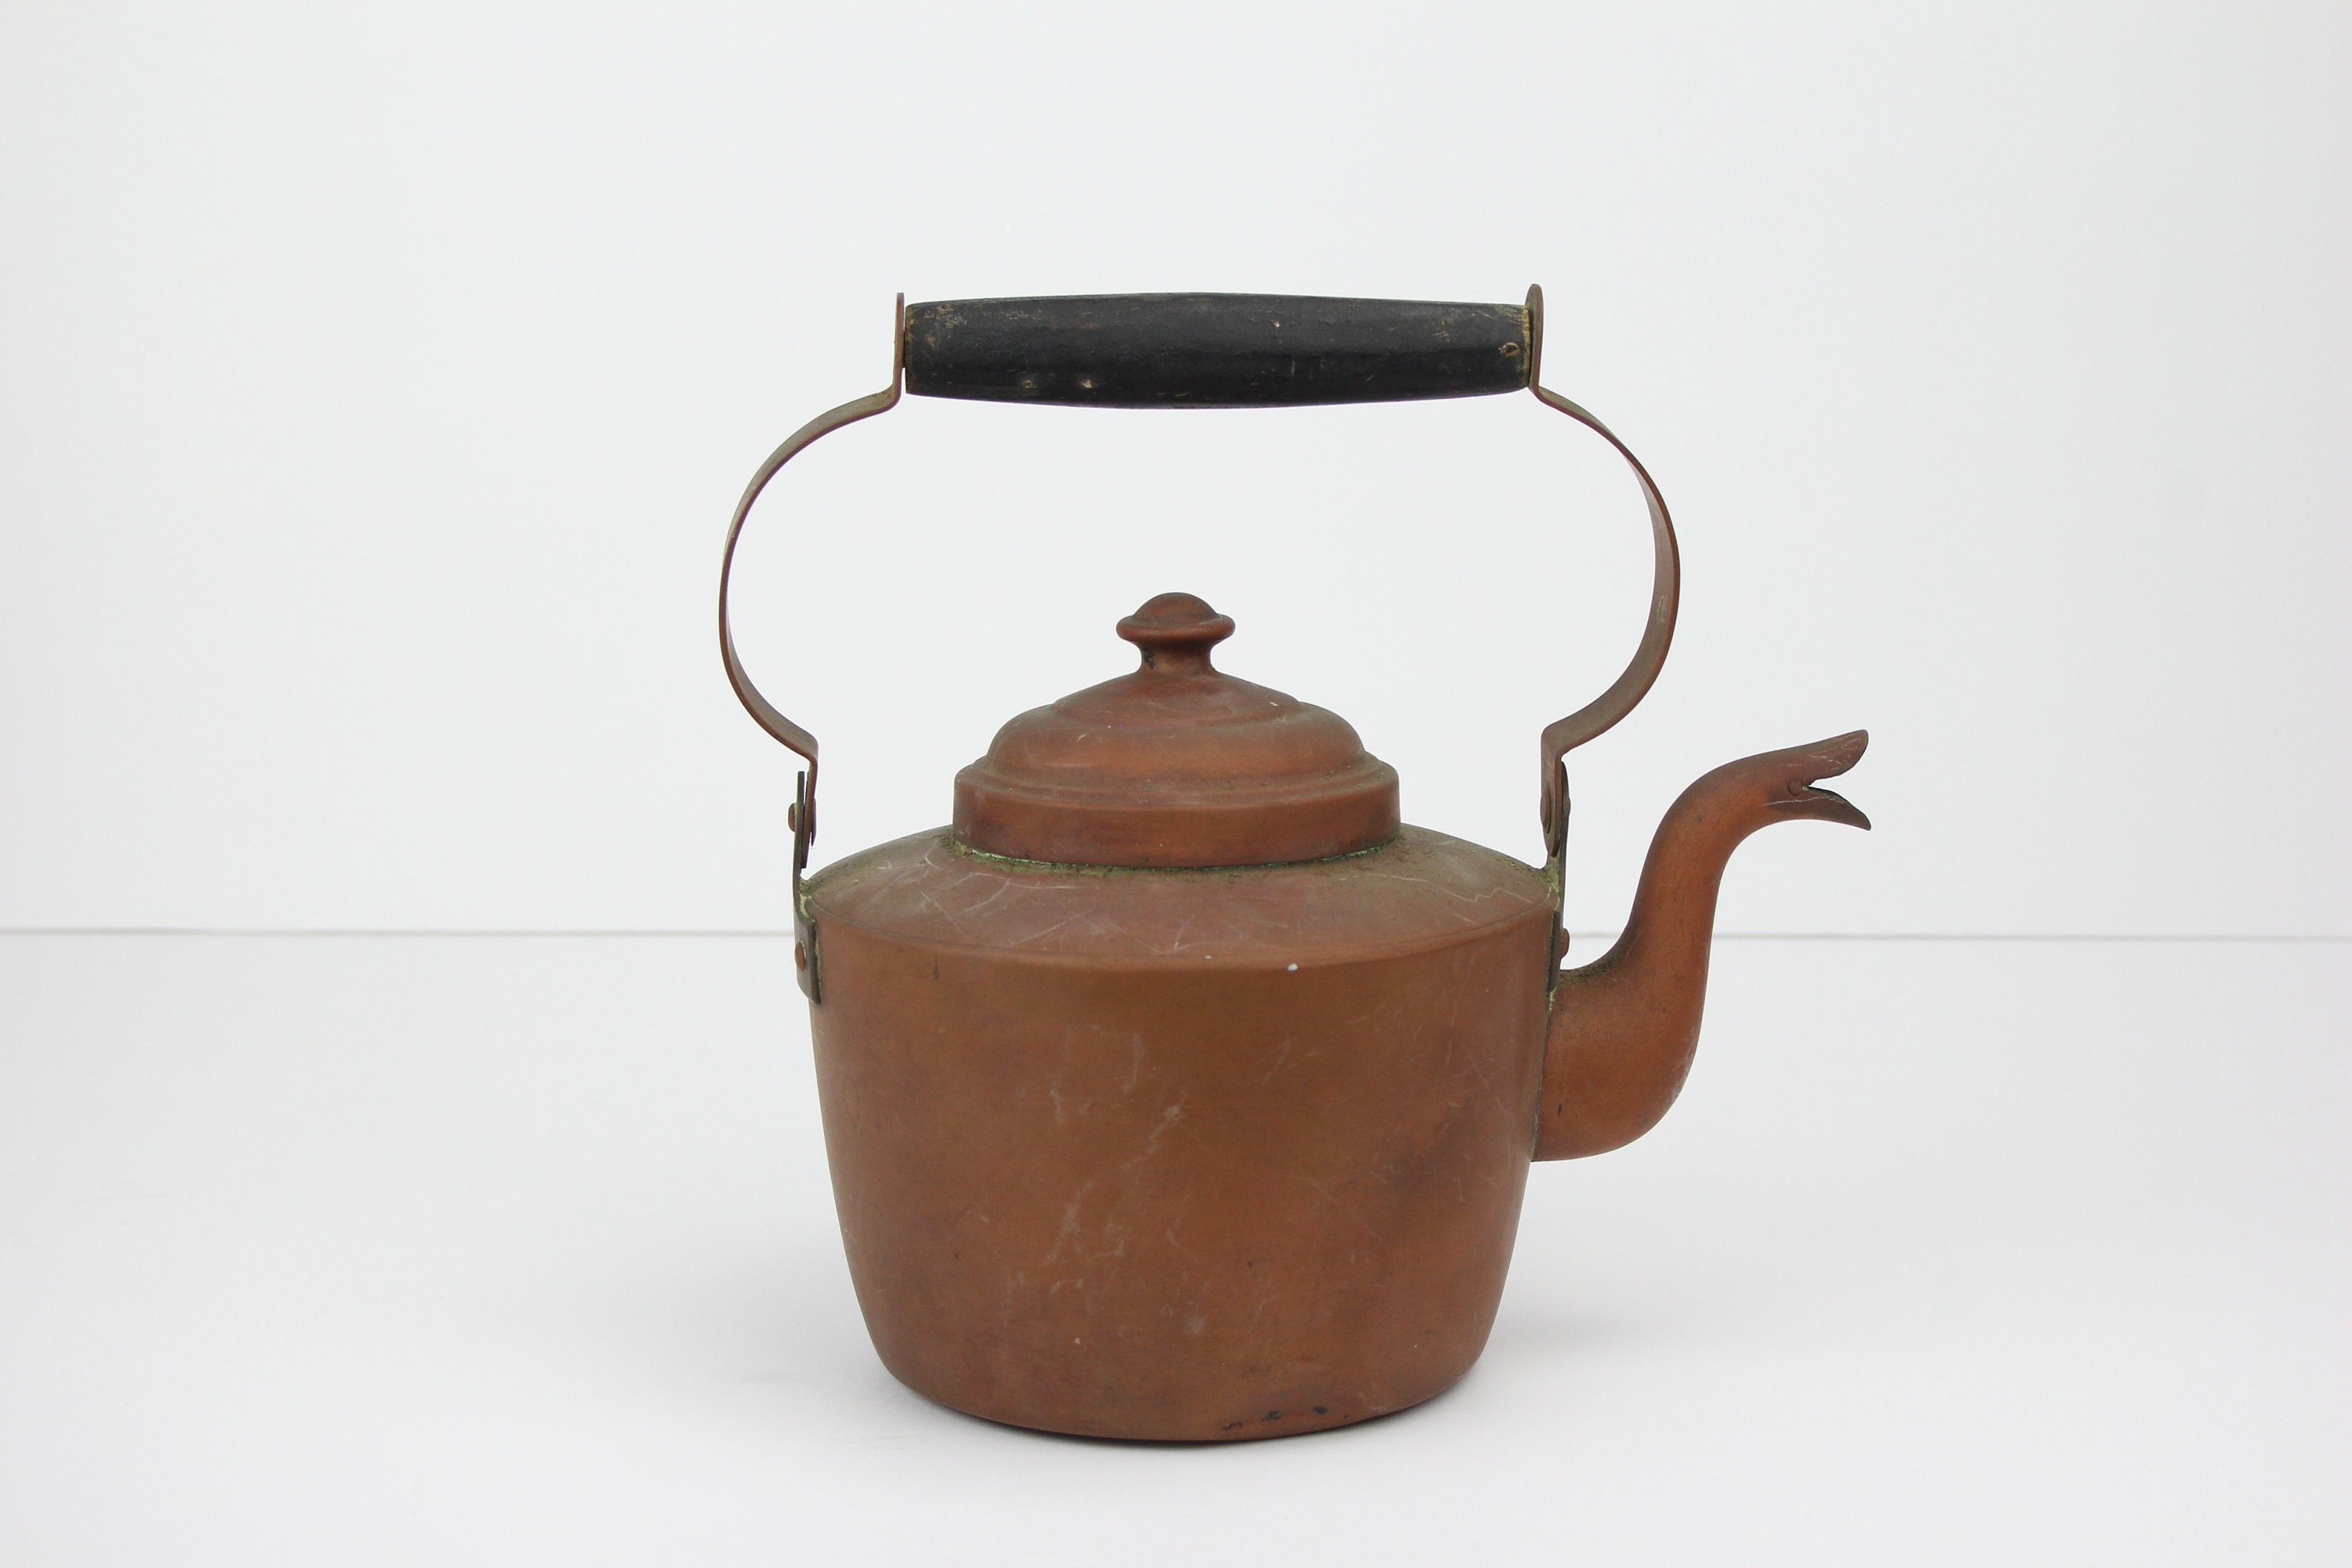 Vintage Tea Pot : Rare Hot Water Kettle Stainless Steel Stripe